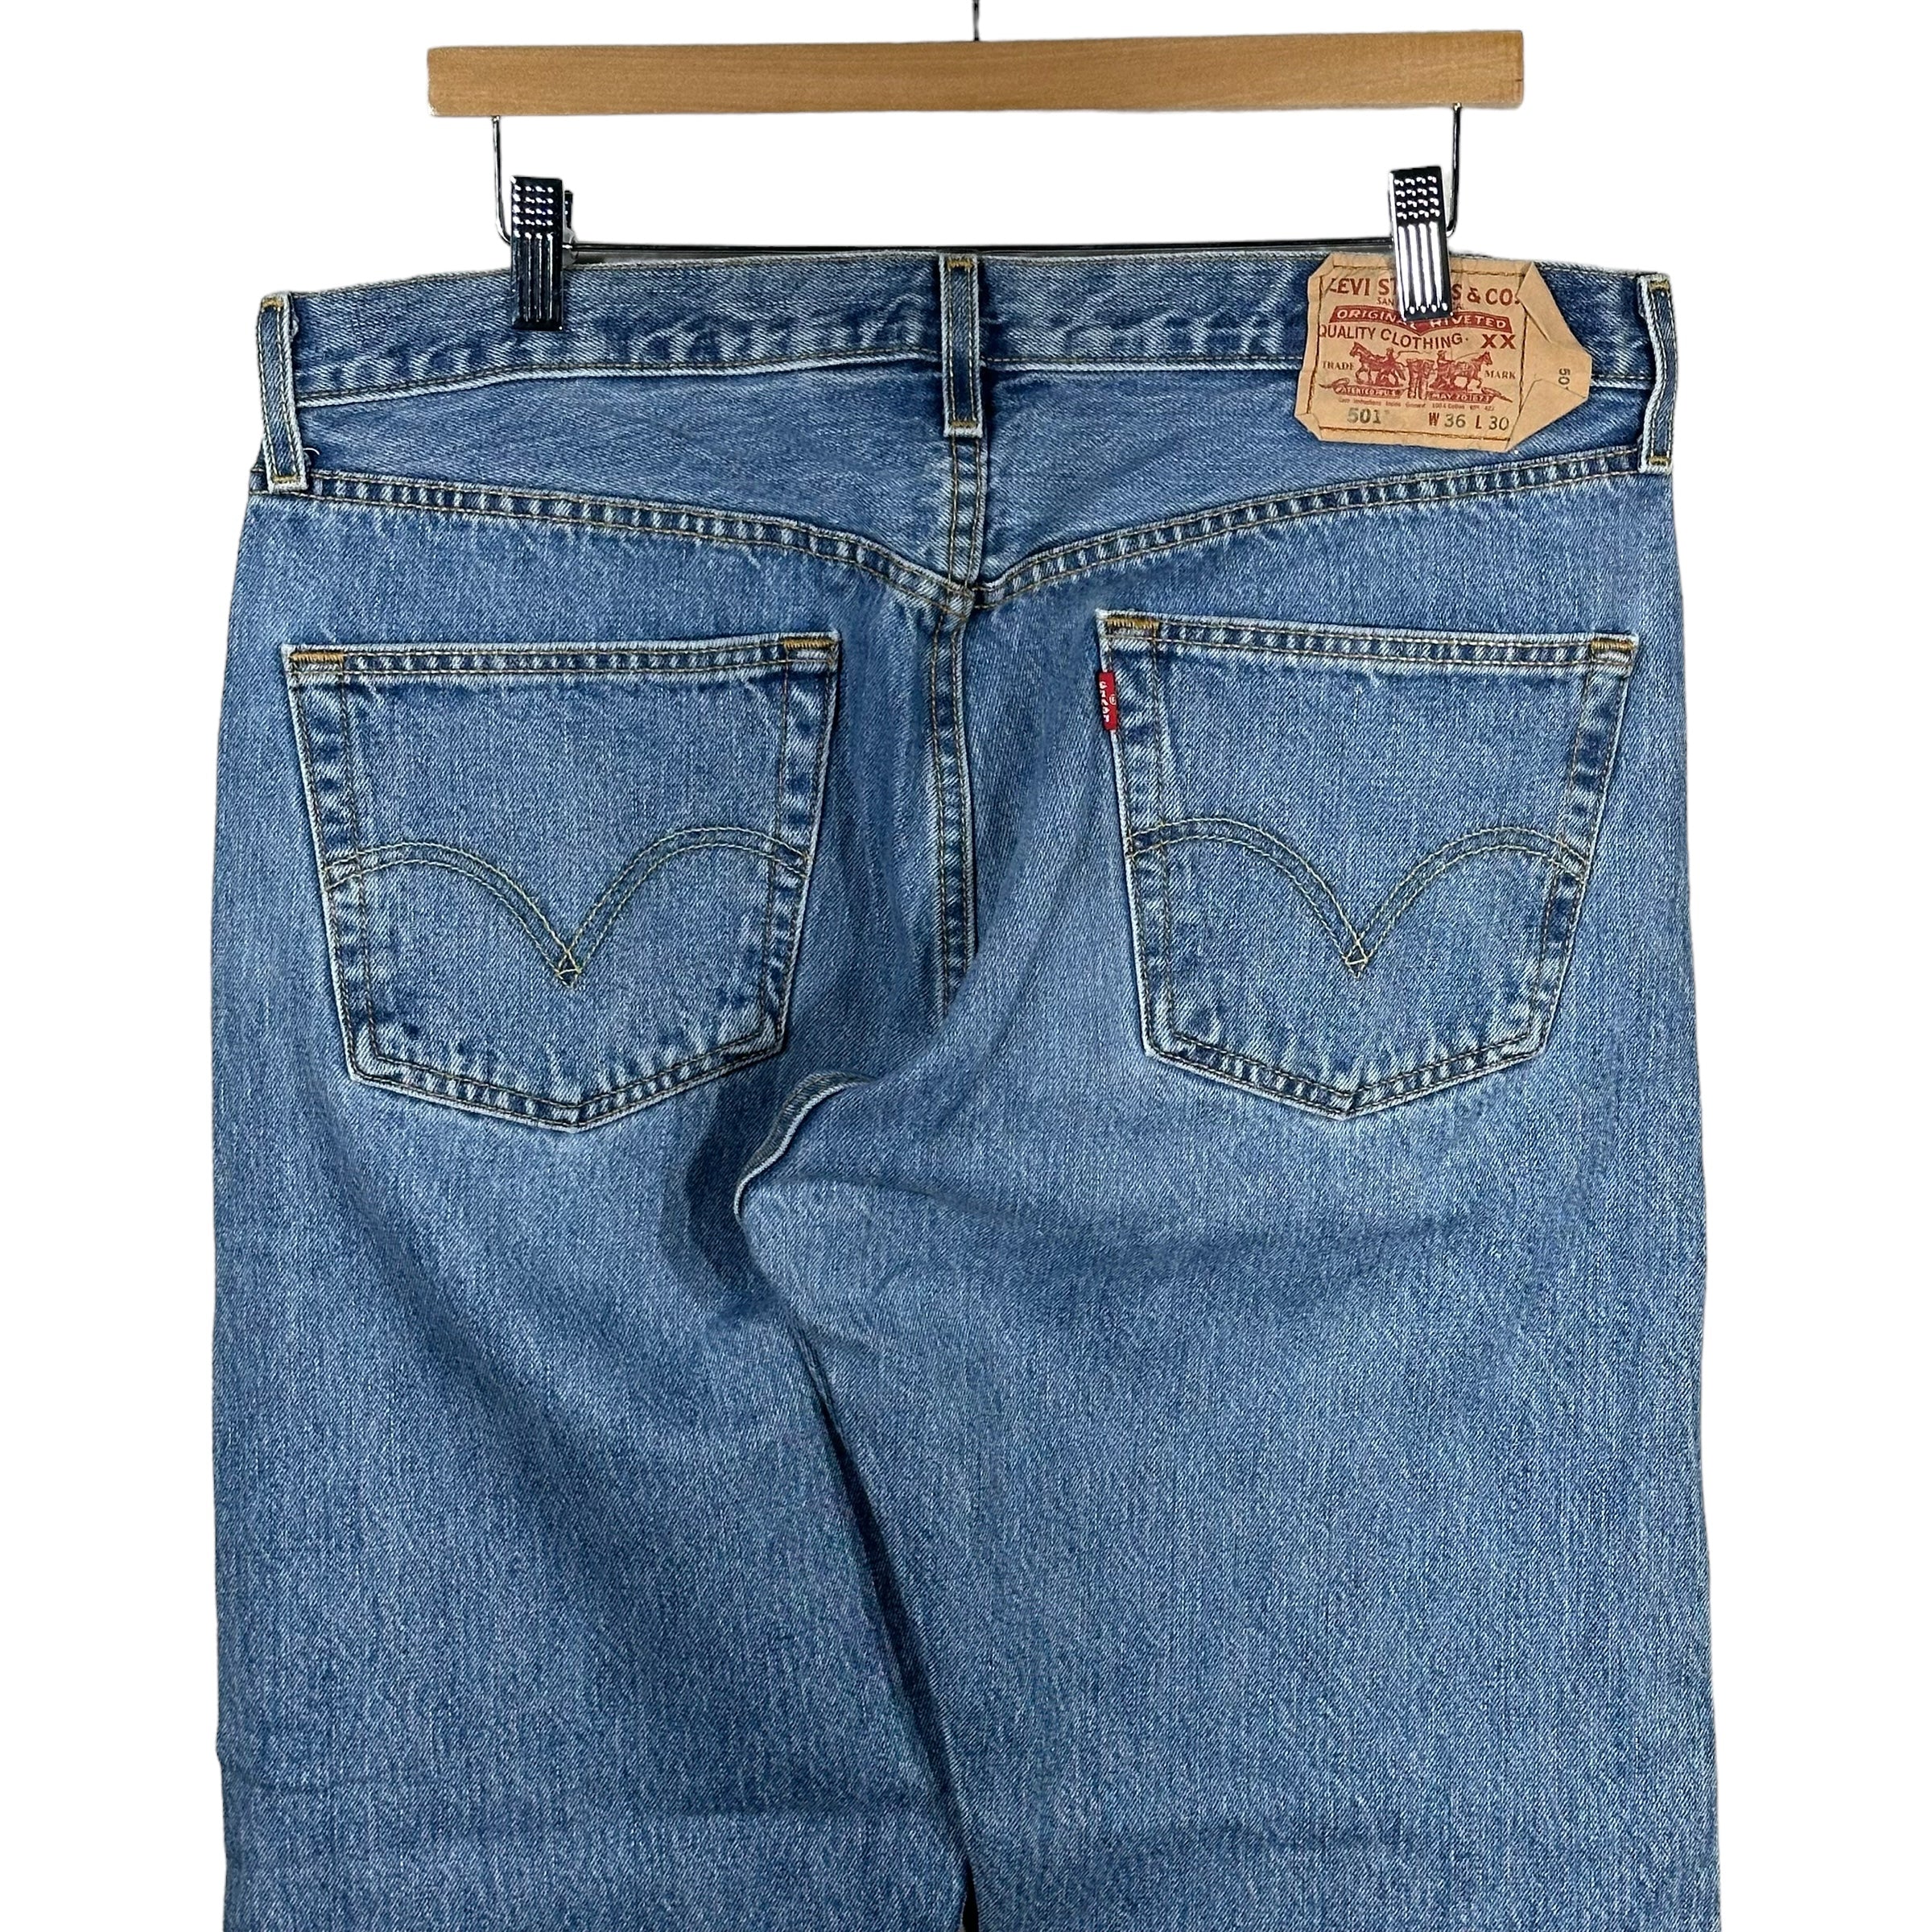 Vintage Levi's 501 Distressed Jeans